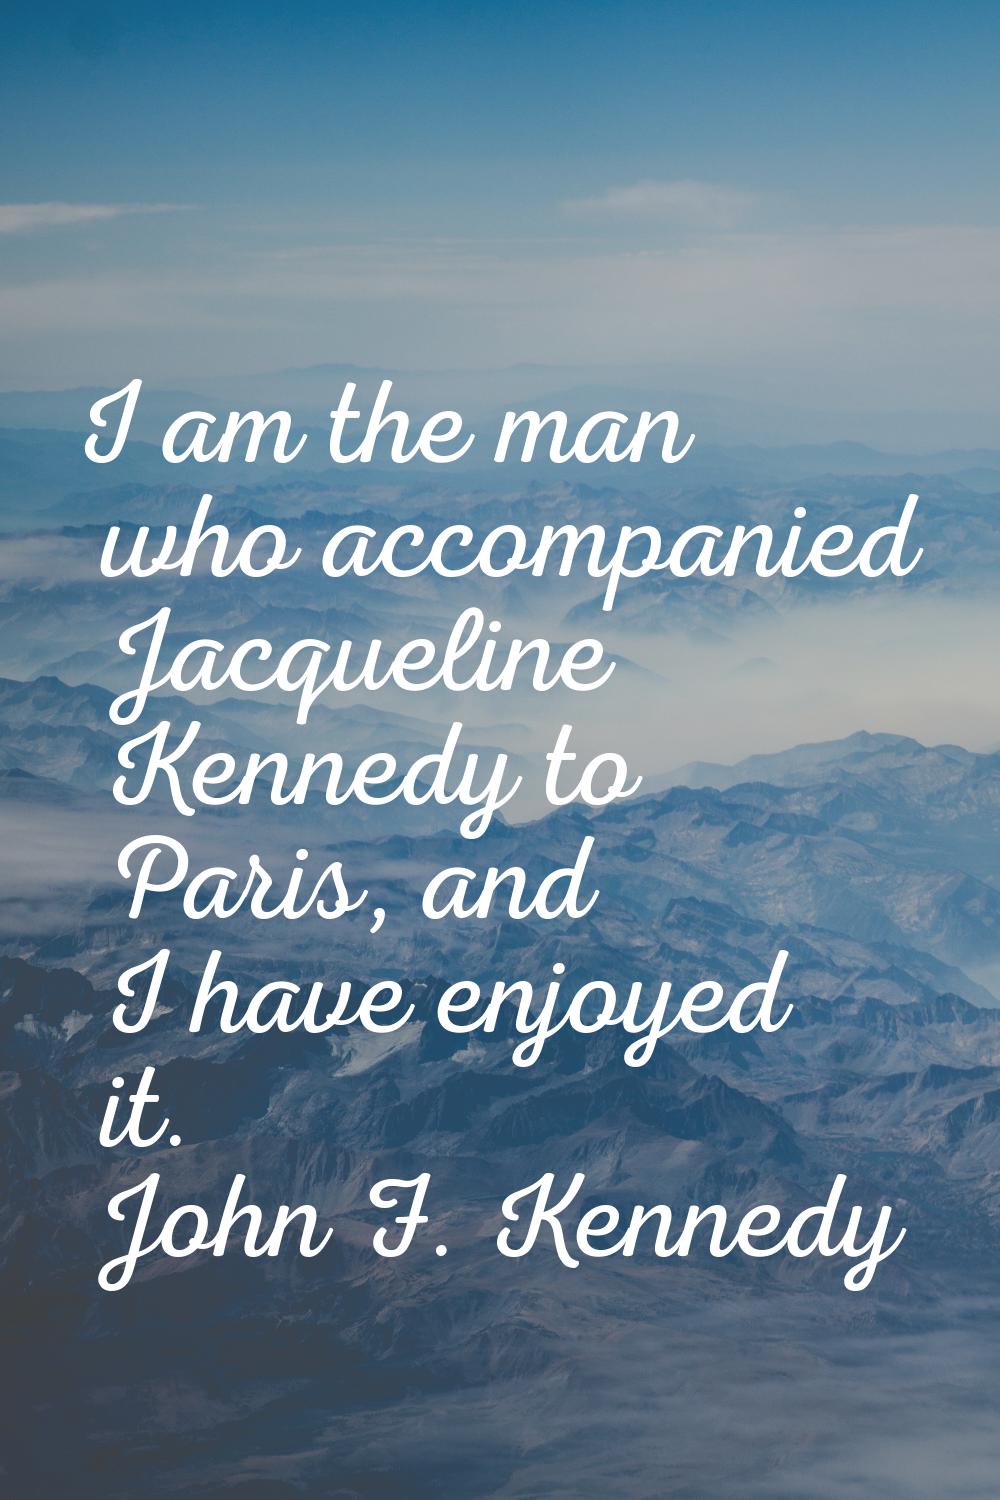 I am the man who accompanied Jacqueline Kennedy to Paris, and I have enjoyed it.